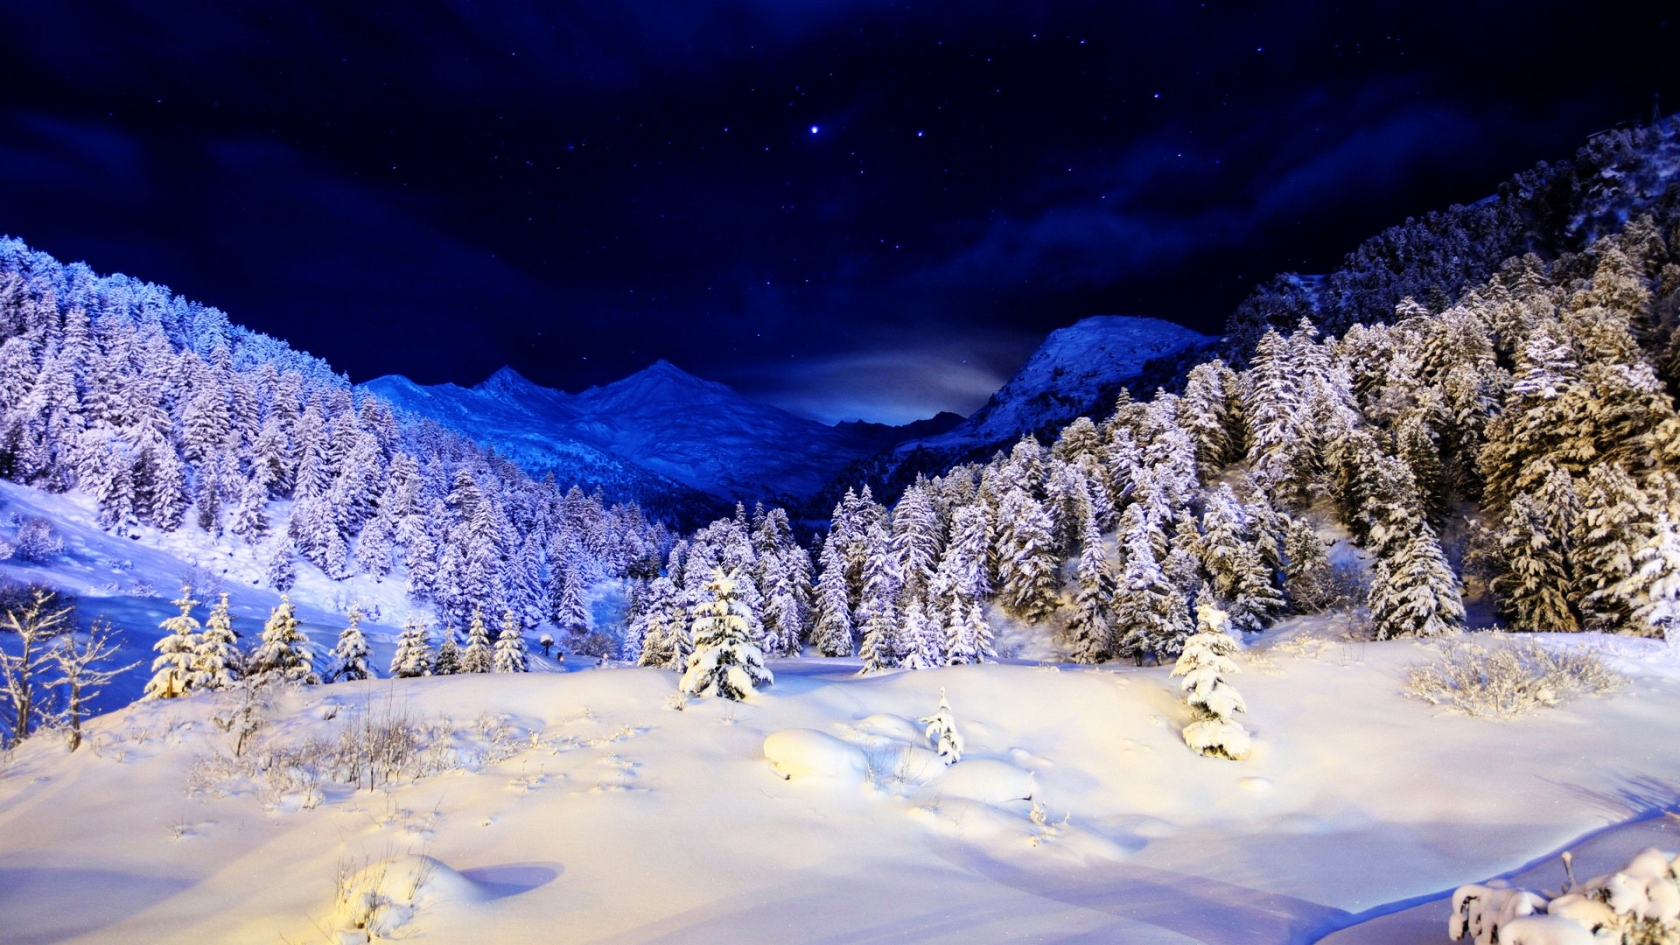 Blue Winter Night for 1680 x 945 HDTV resolution